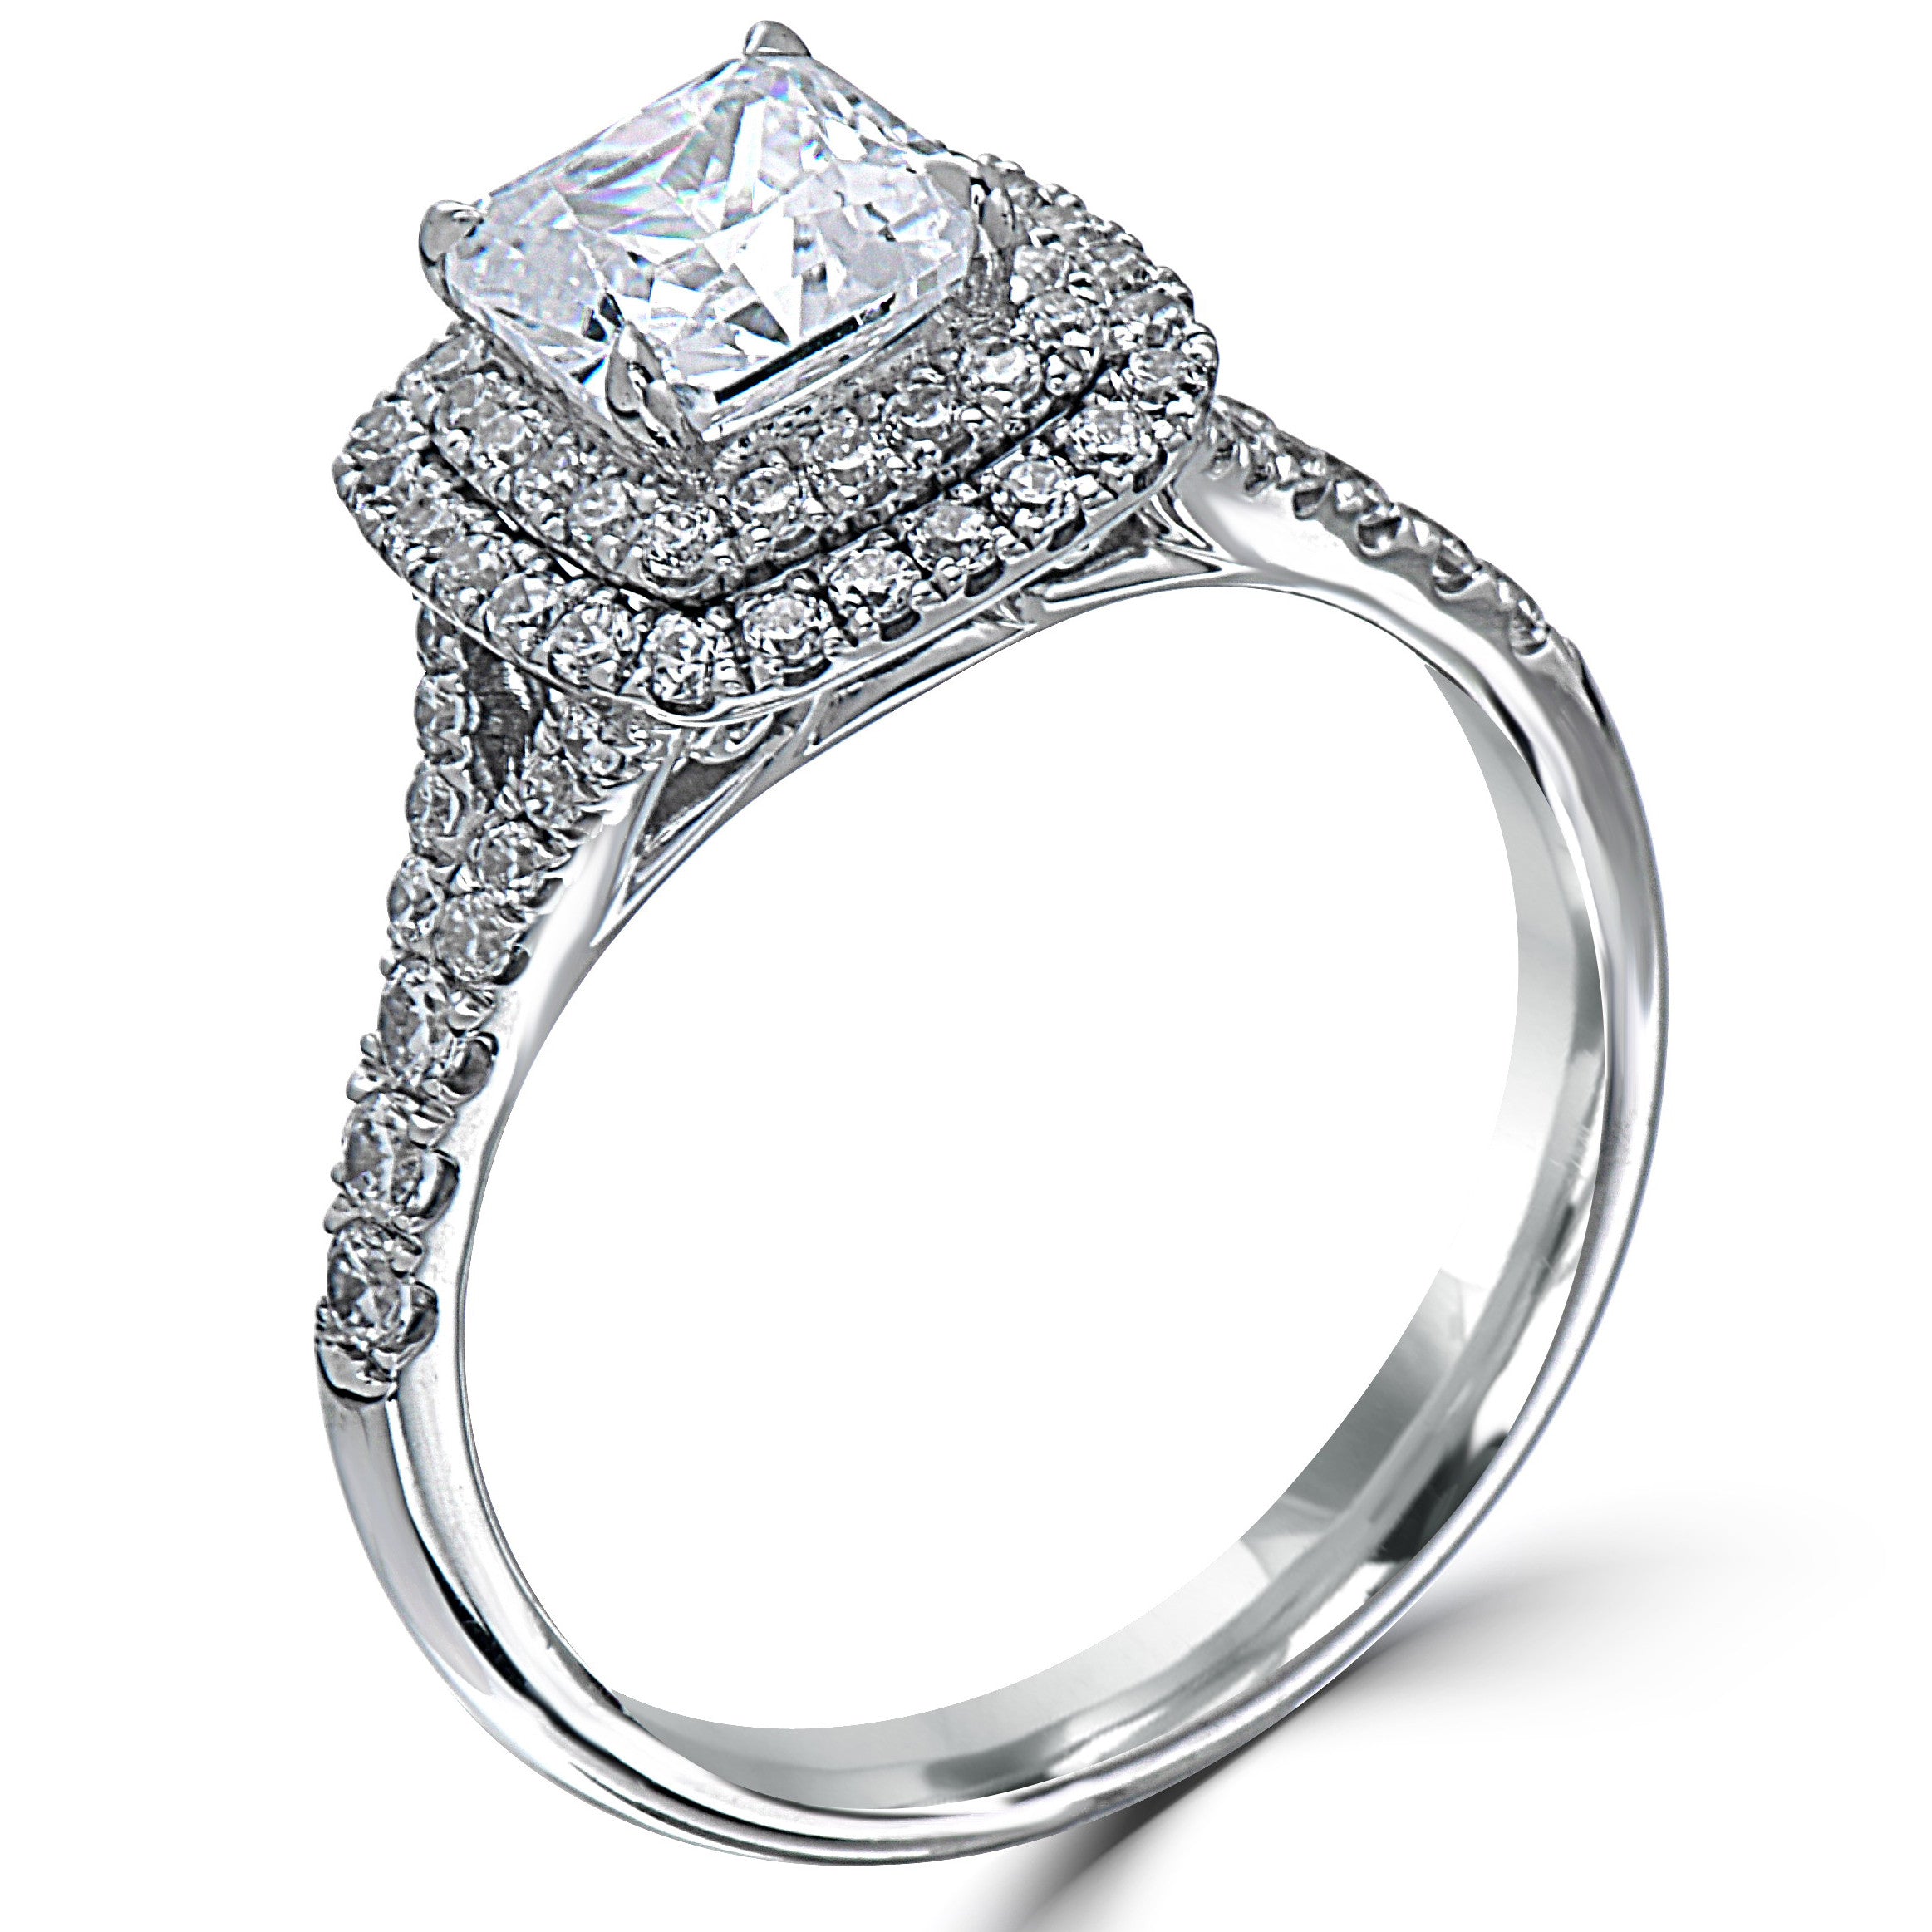 2 Carat Diamond Rings | Jacob Mercari